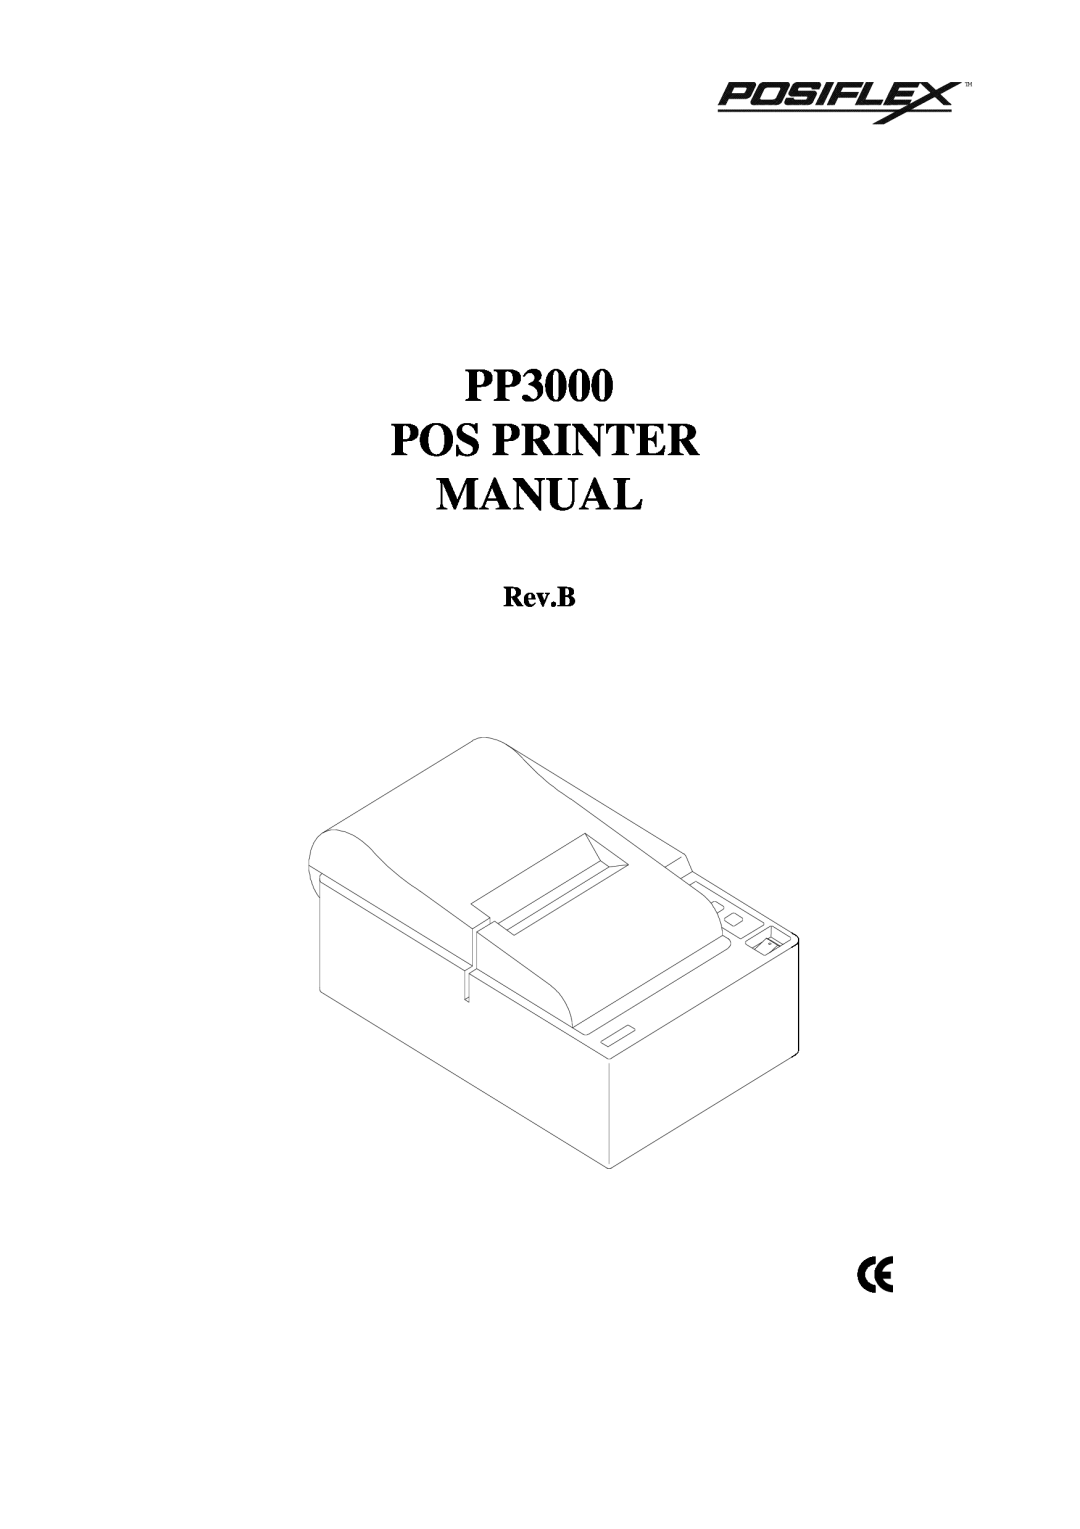 POSIFLEX Business Machines manual Rev.B, PP3000 POS PRINTER MANUAL 